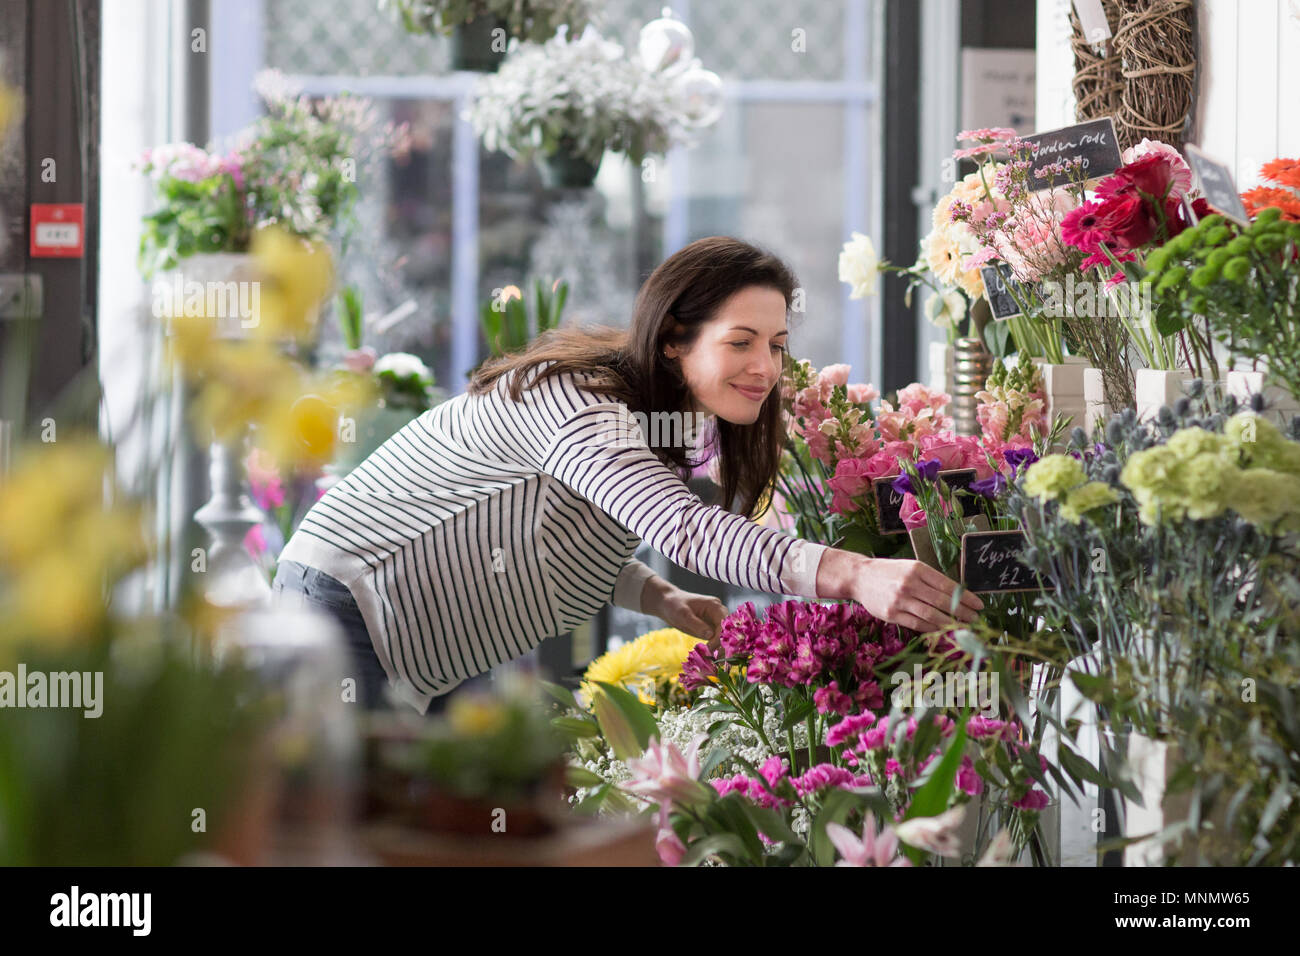 Adult female choosing flowers in a florist Stock Photo